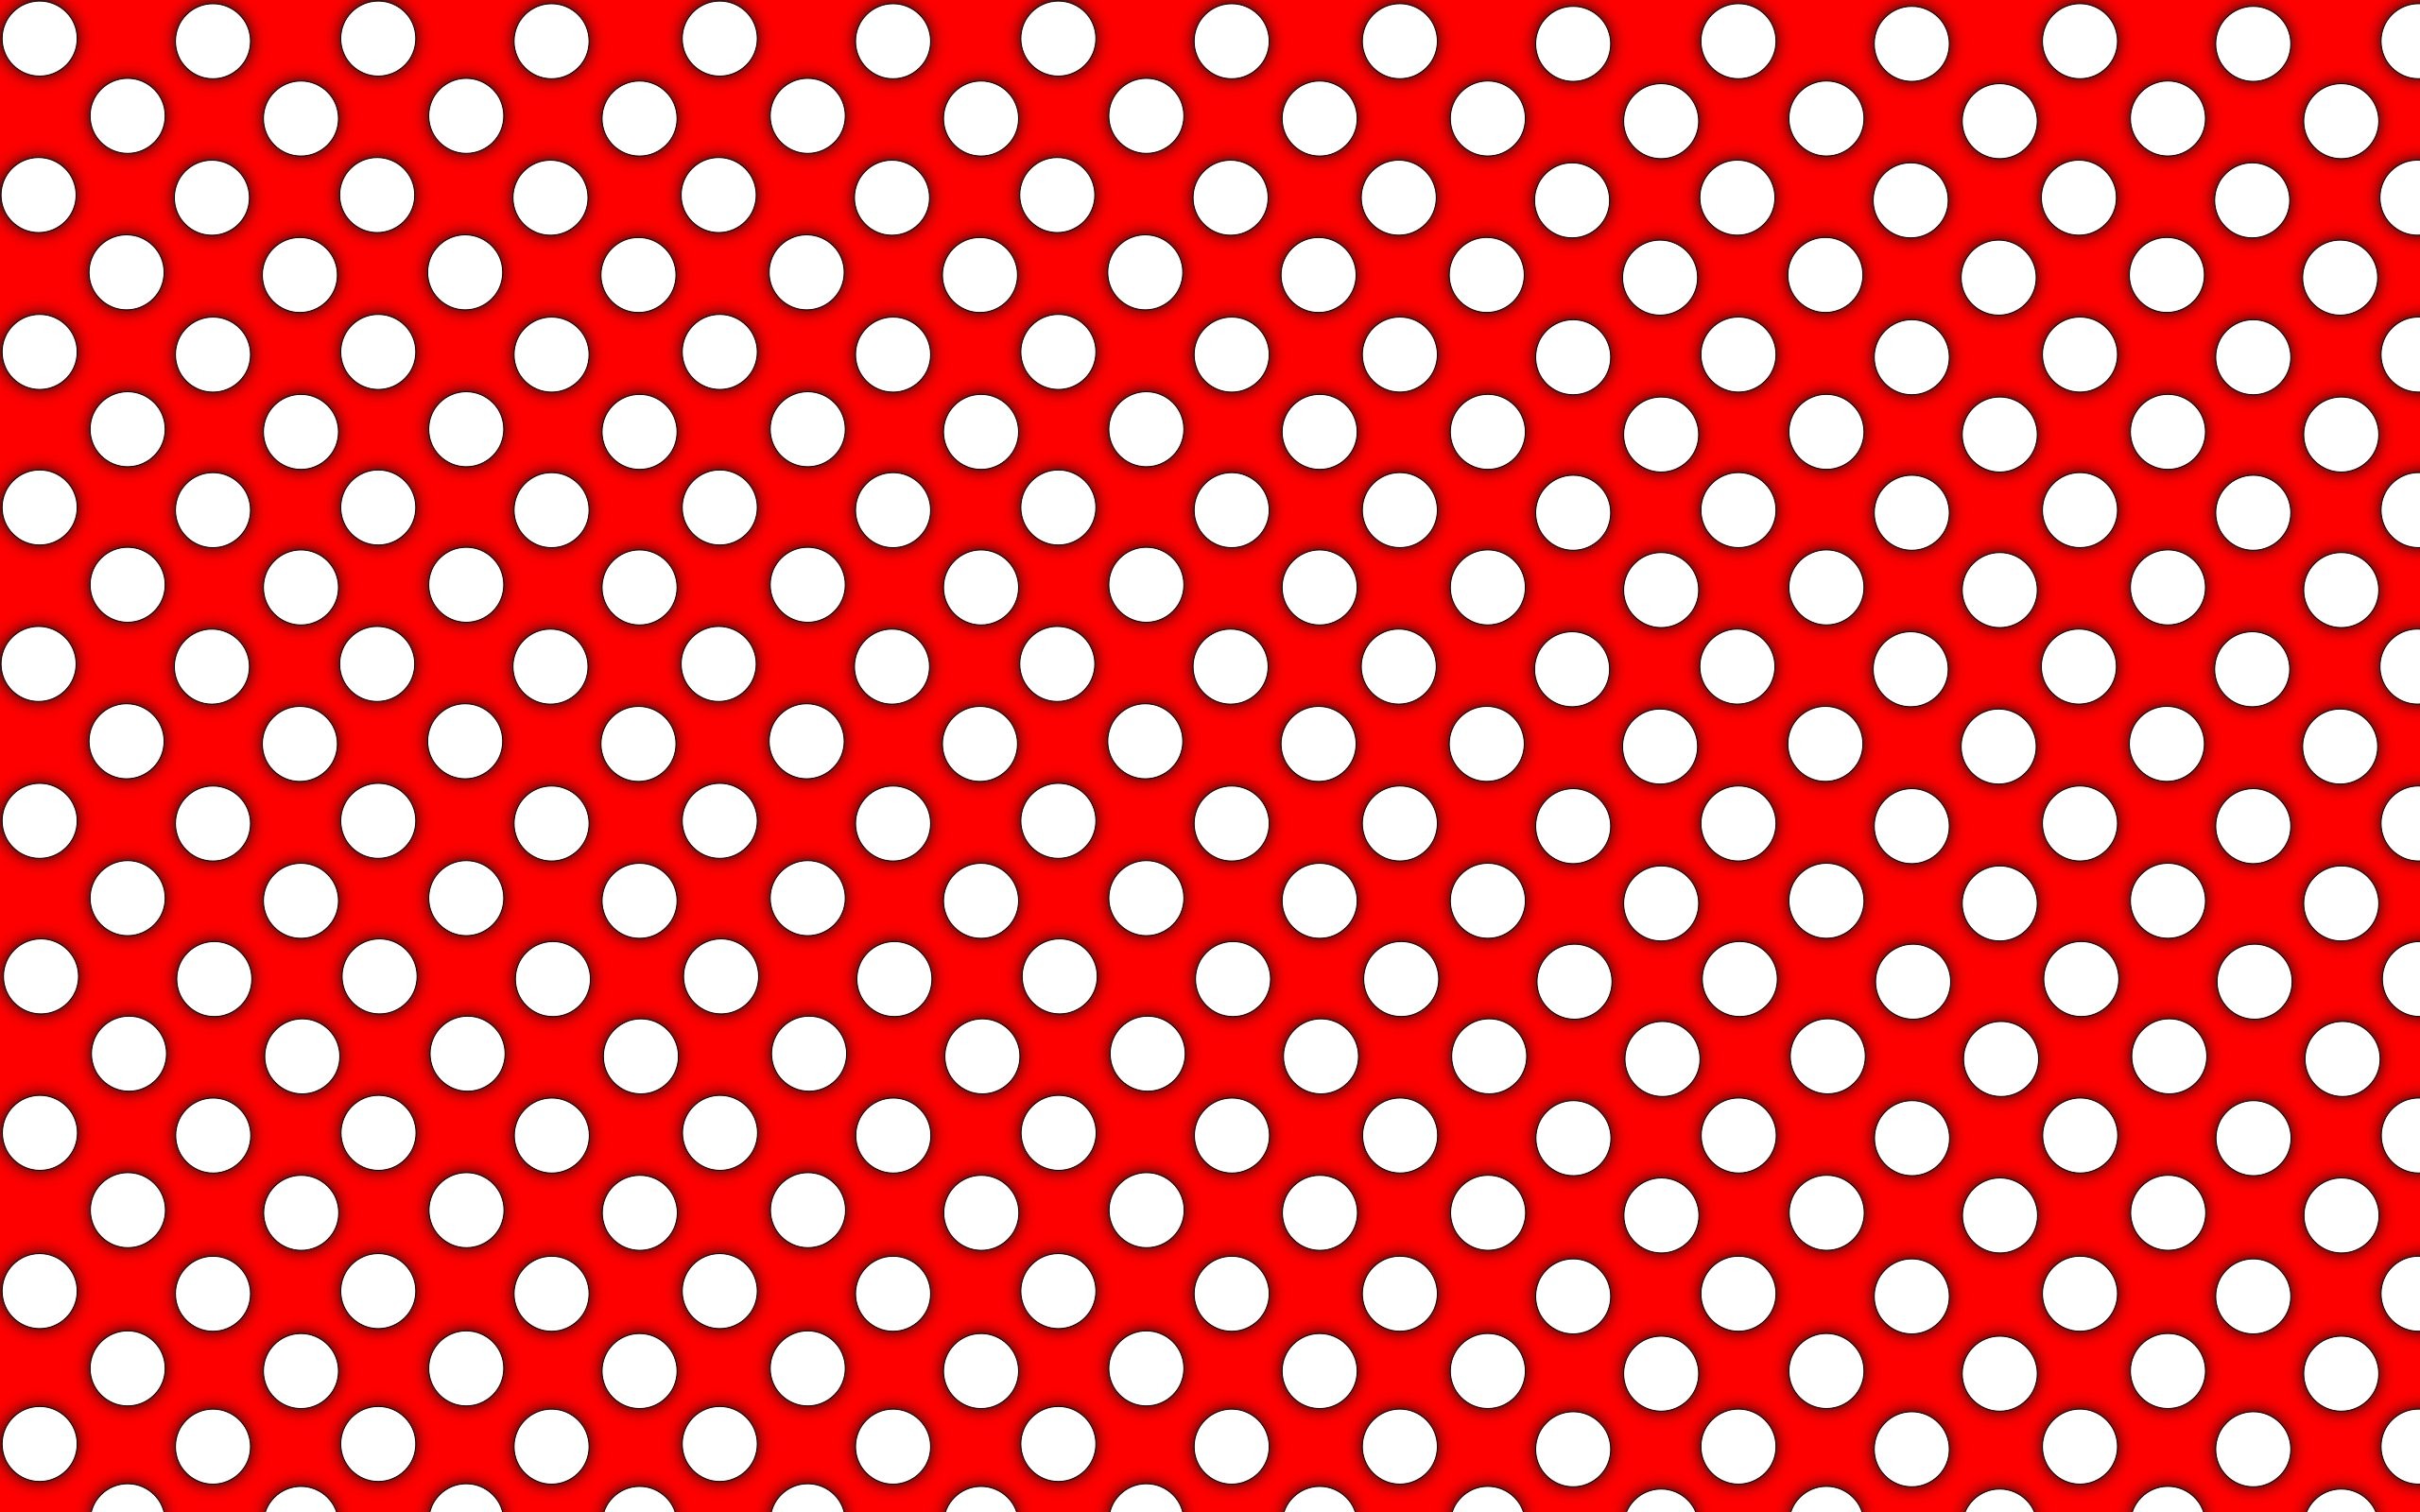 polka dot wallpaper,pattern,red,polka dot,line,design